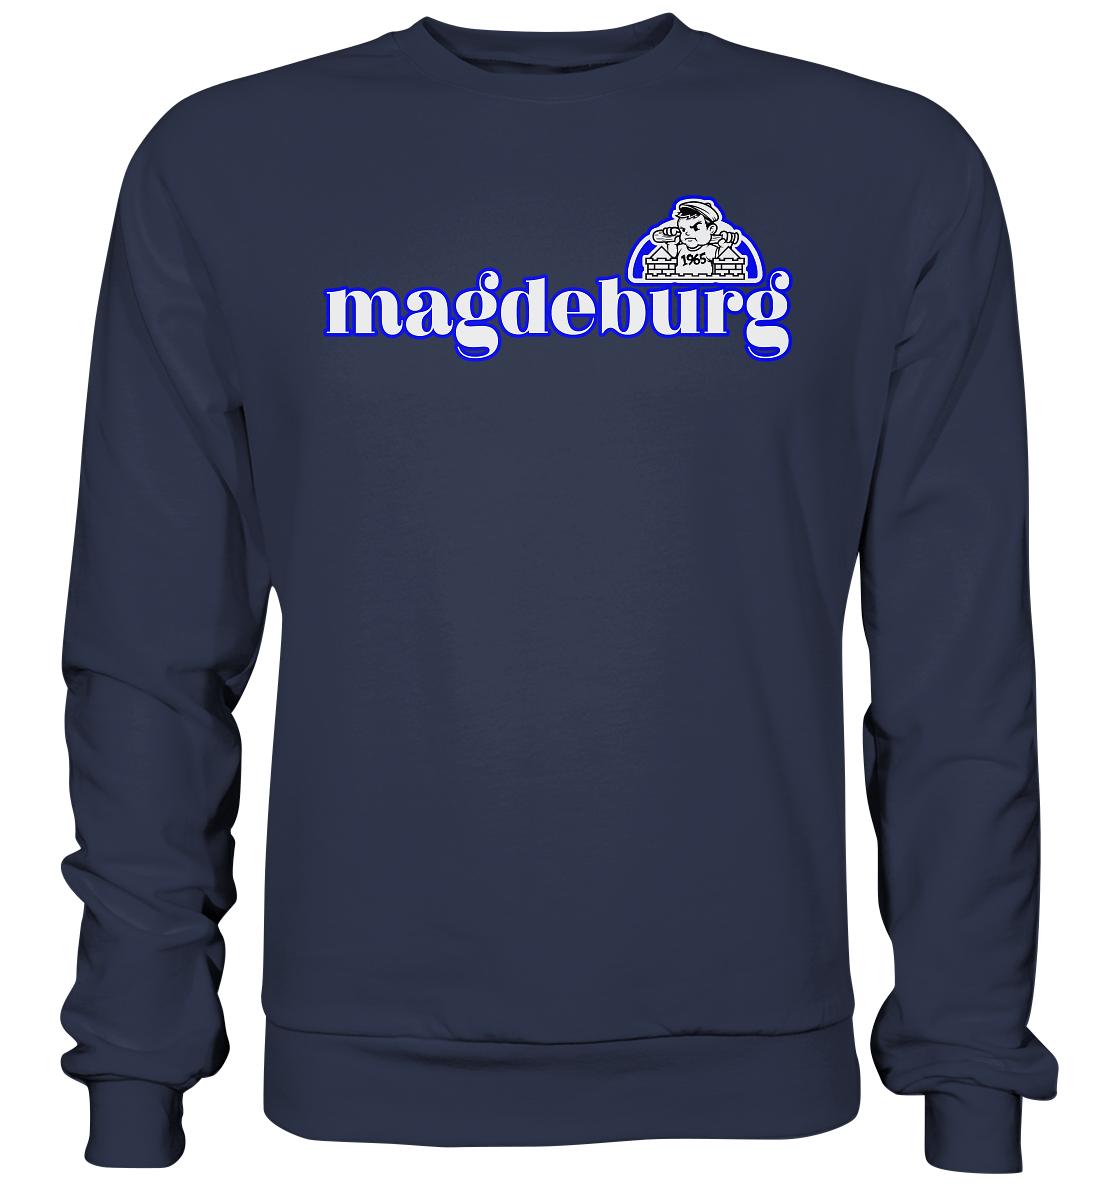 Magdeburger - Sweatshirt